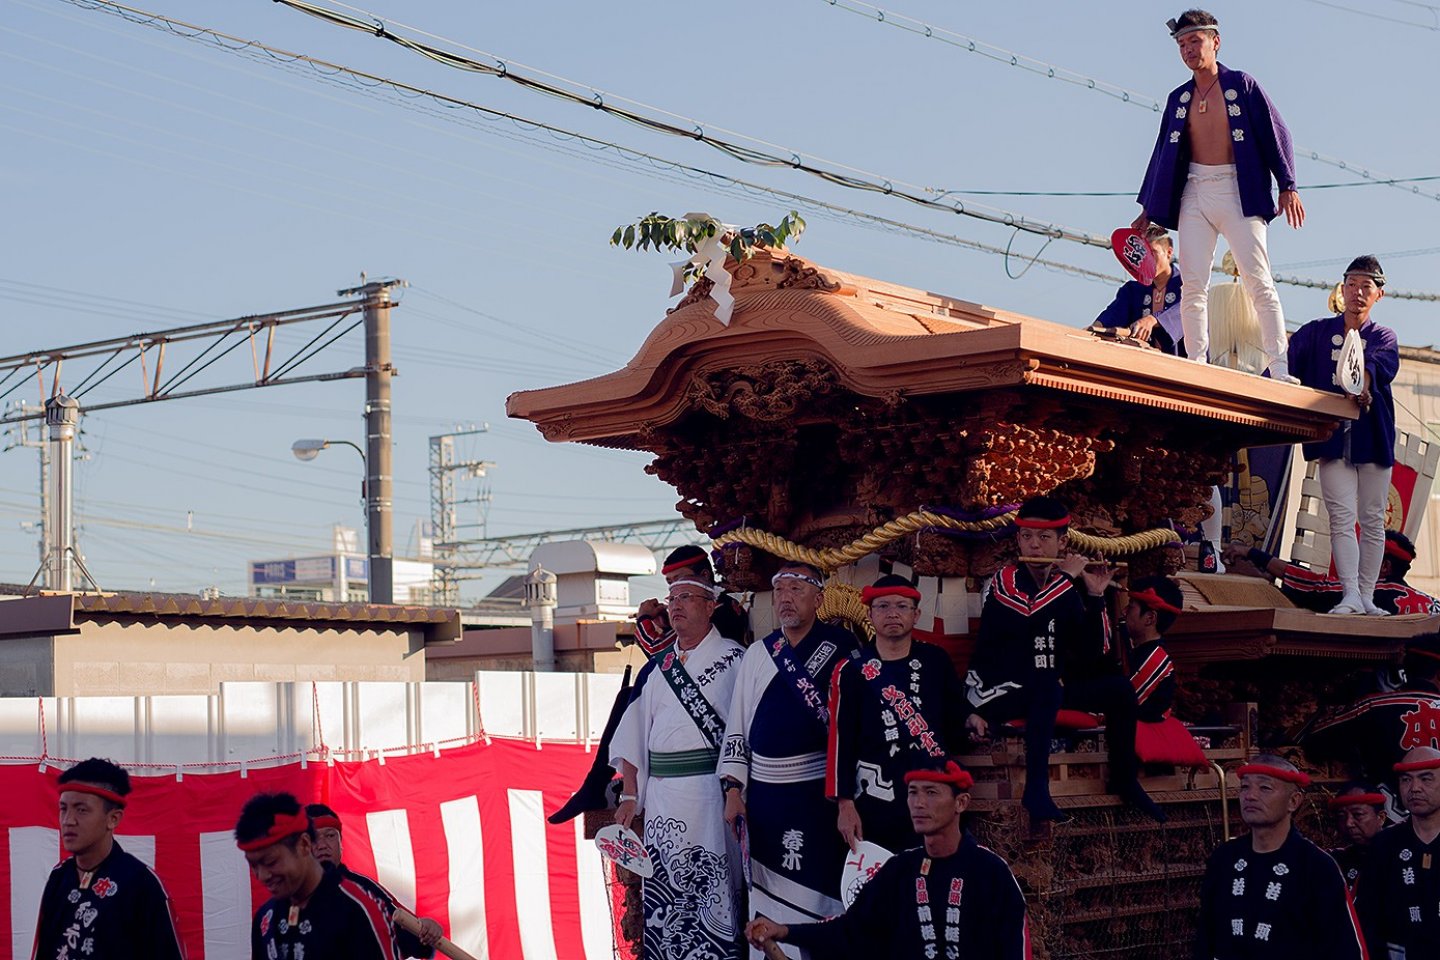 Neighbourhood teams pull their danjiri (floats) through the streets of Kishiwada, vying for glory.